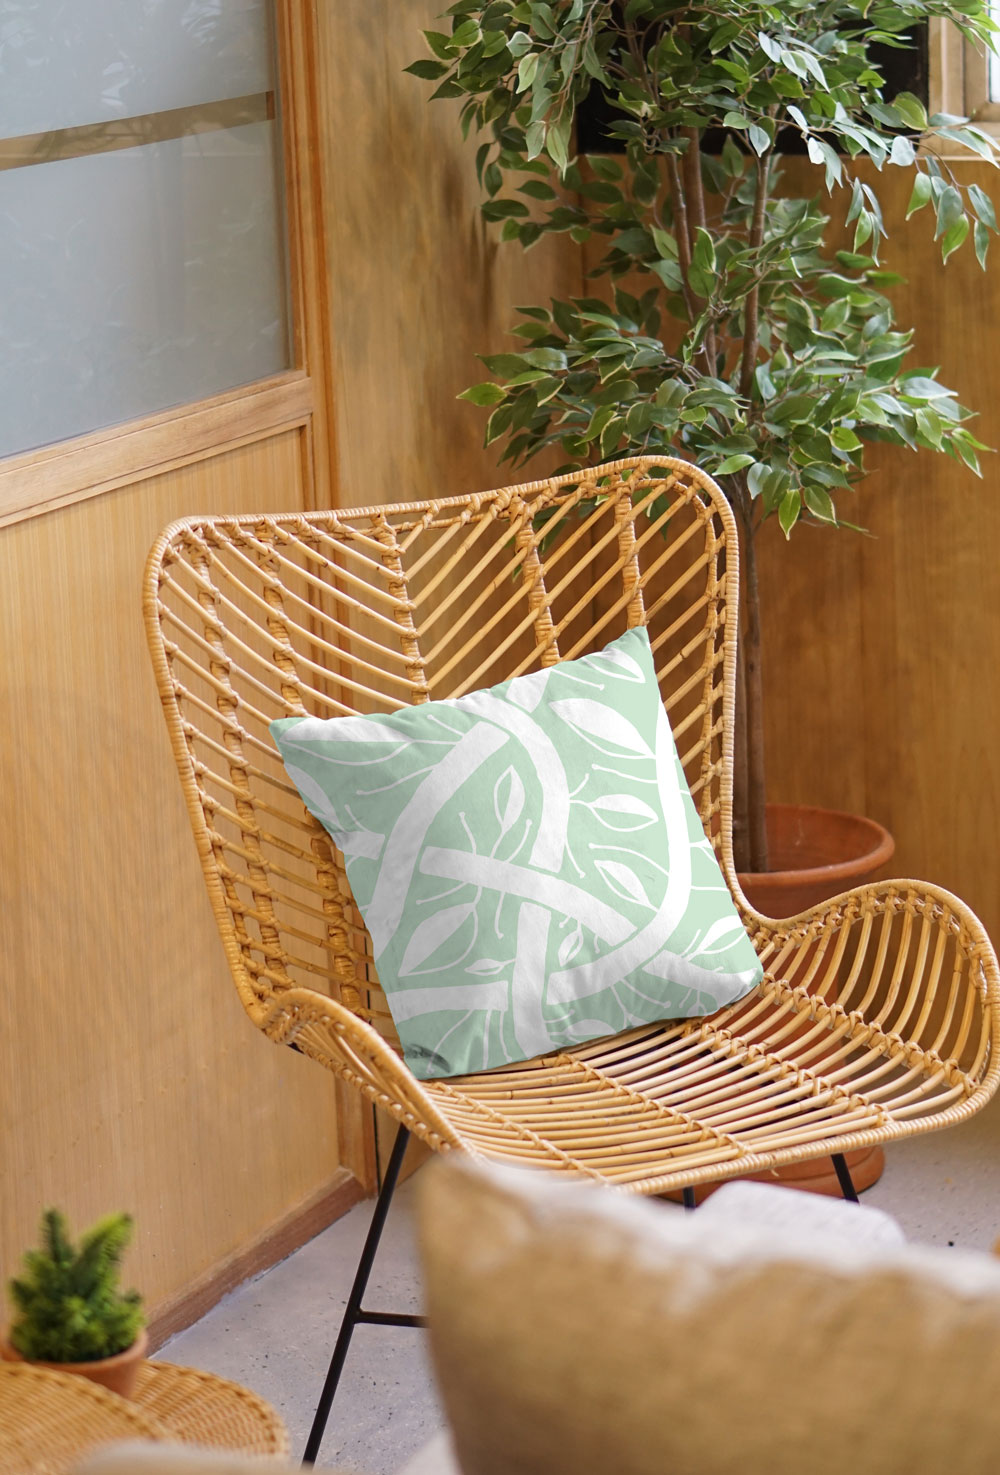 Mint Green Abstract Botanical Pillow (Bogolanfini Garden) – indoor/outdoor pillow